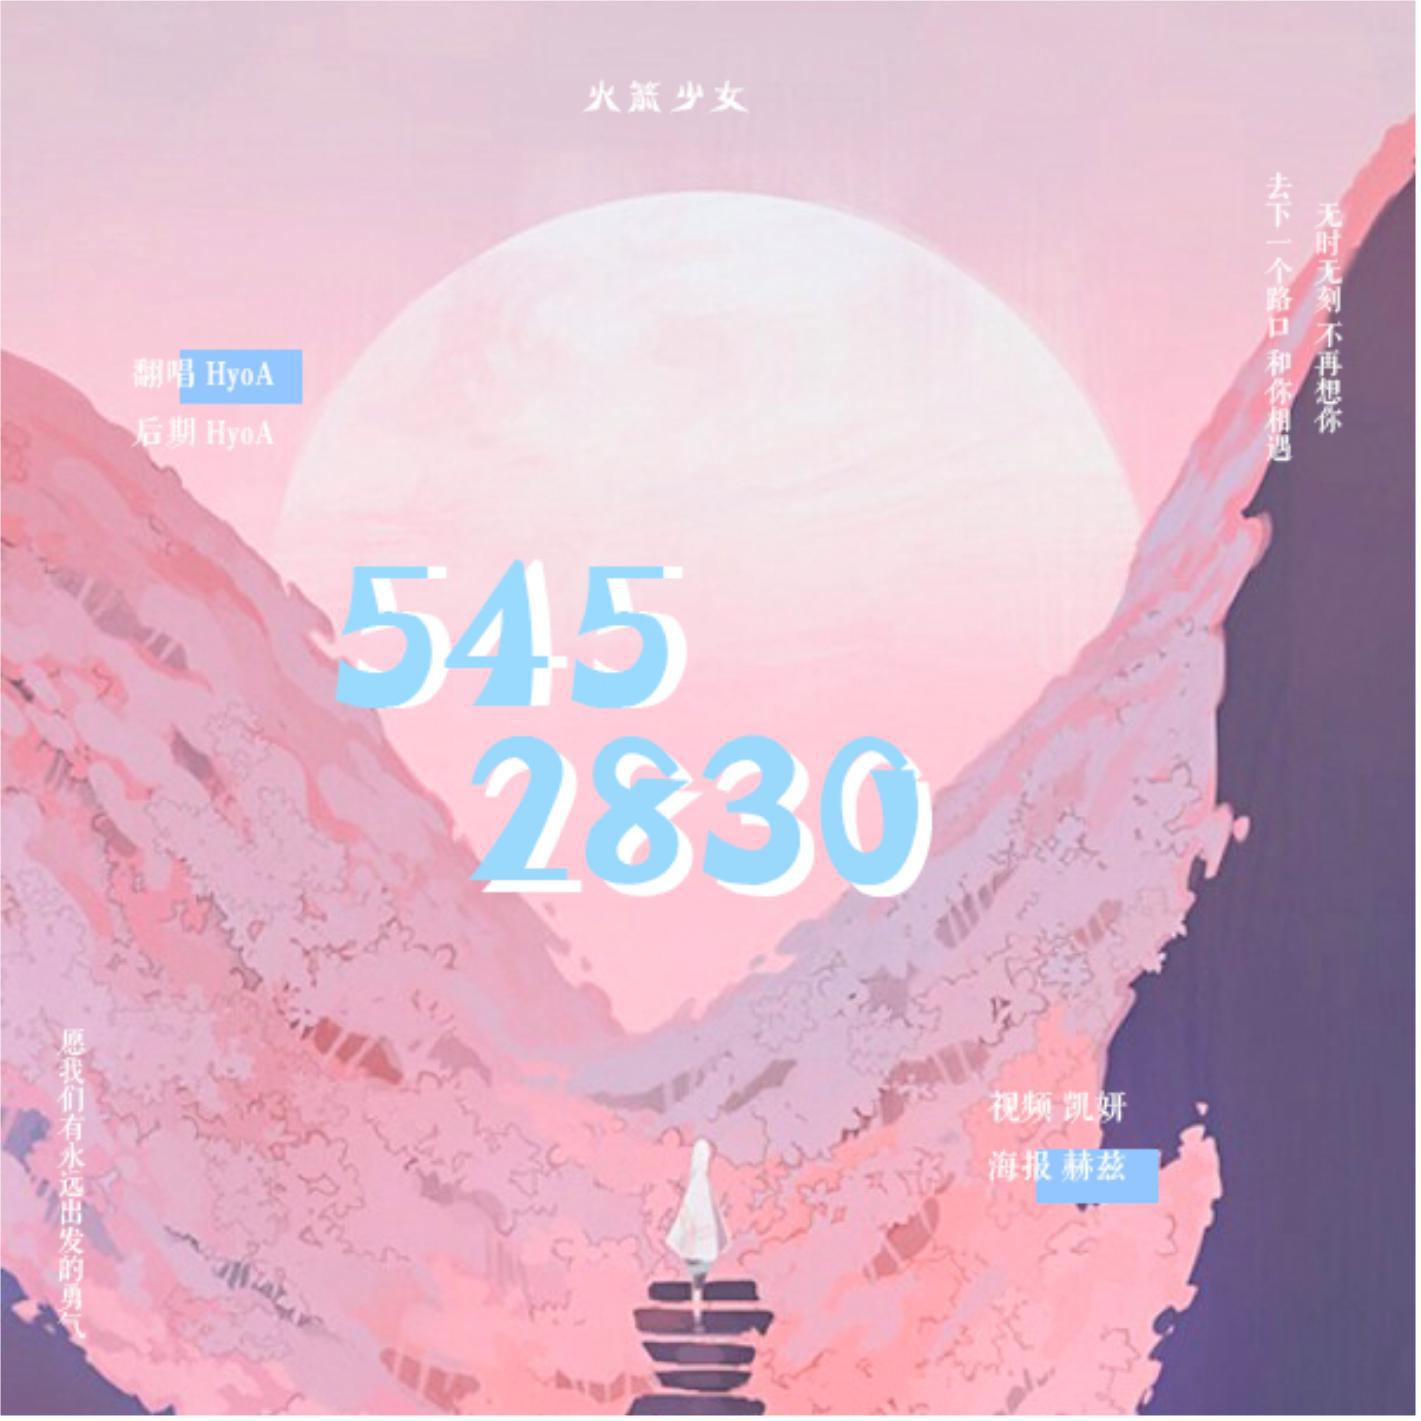 HyoA晓儿 - 5452830